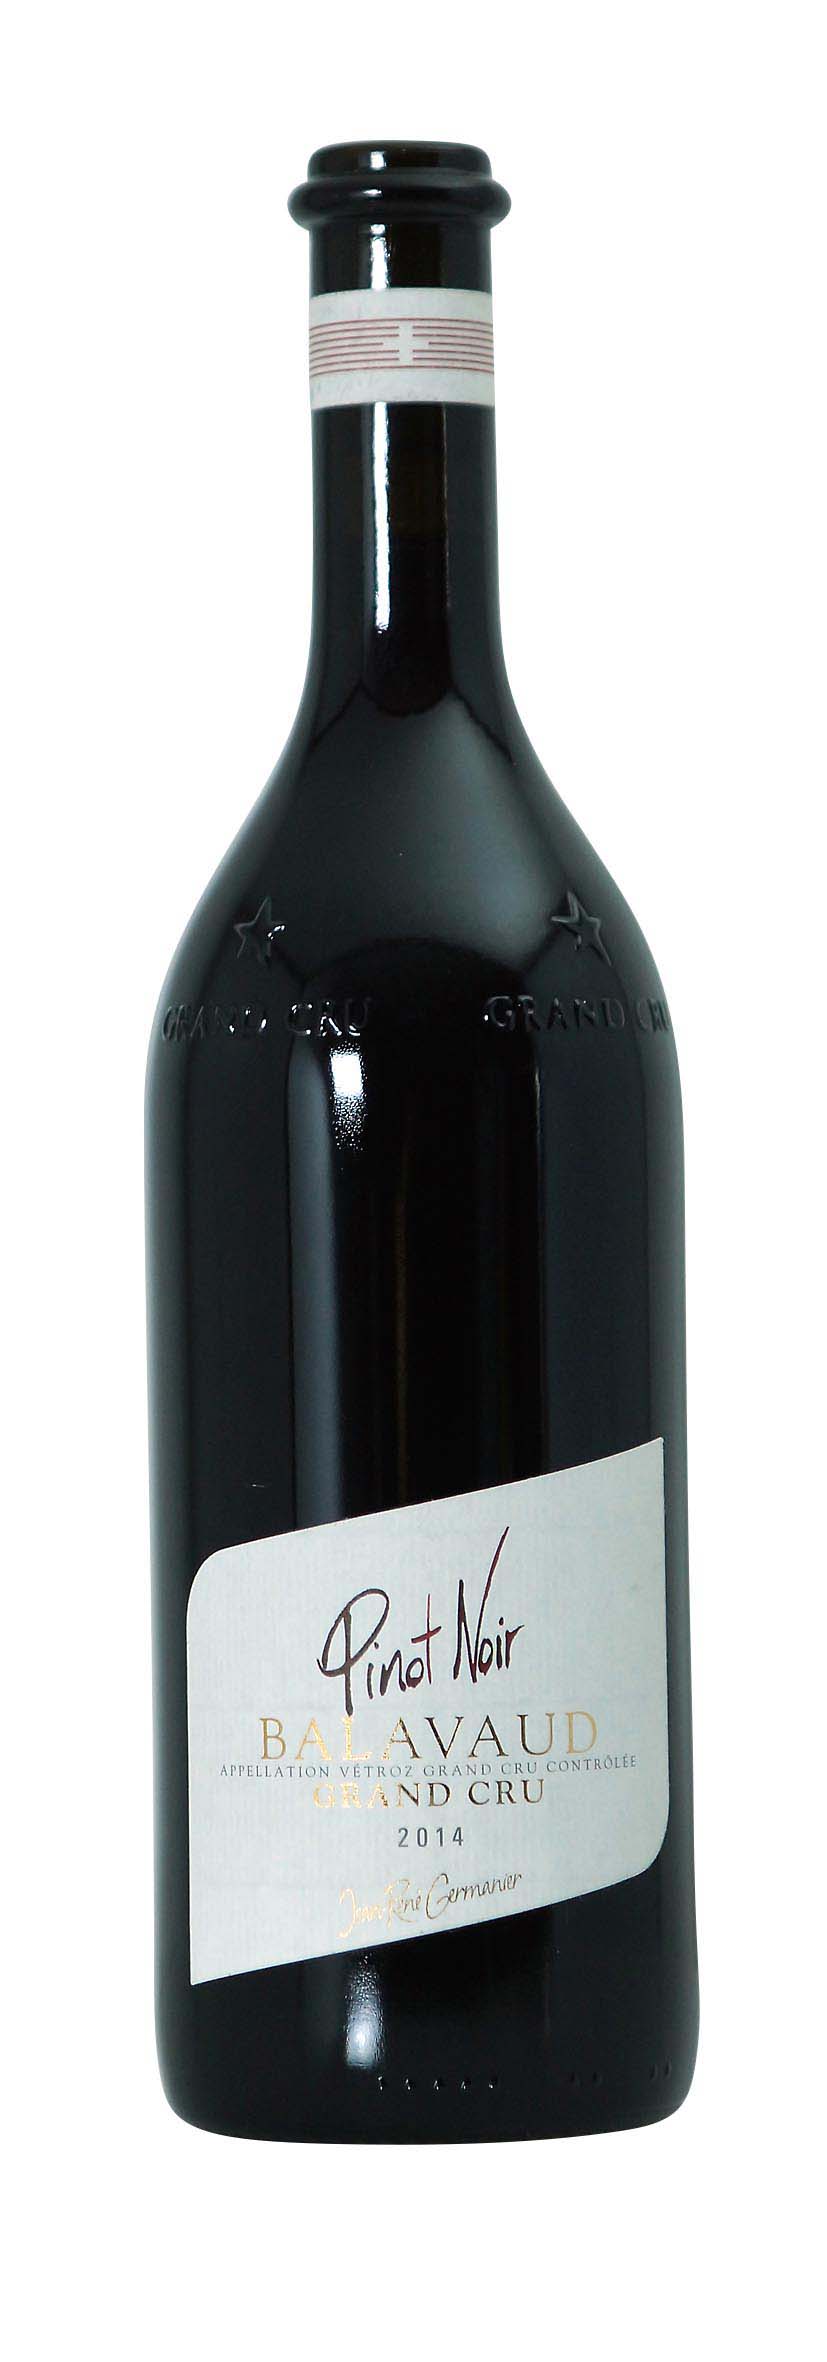 Valais AOC Grand Cru Pinot Noir Balavaud 2014